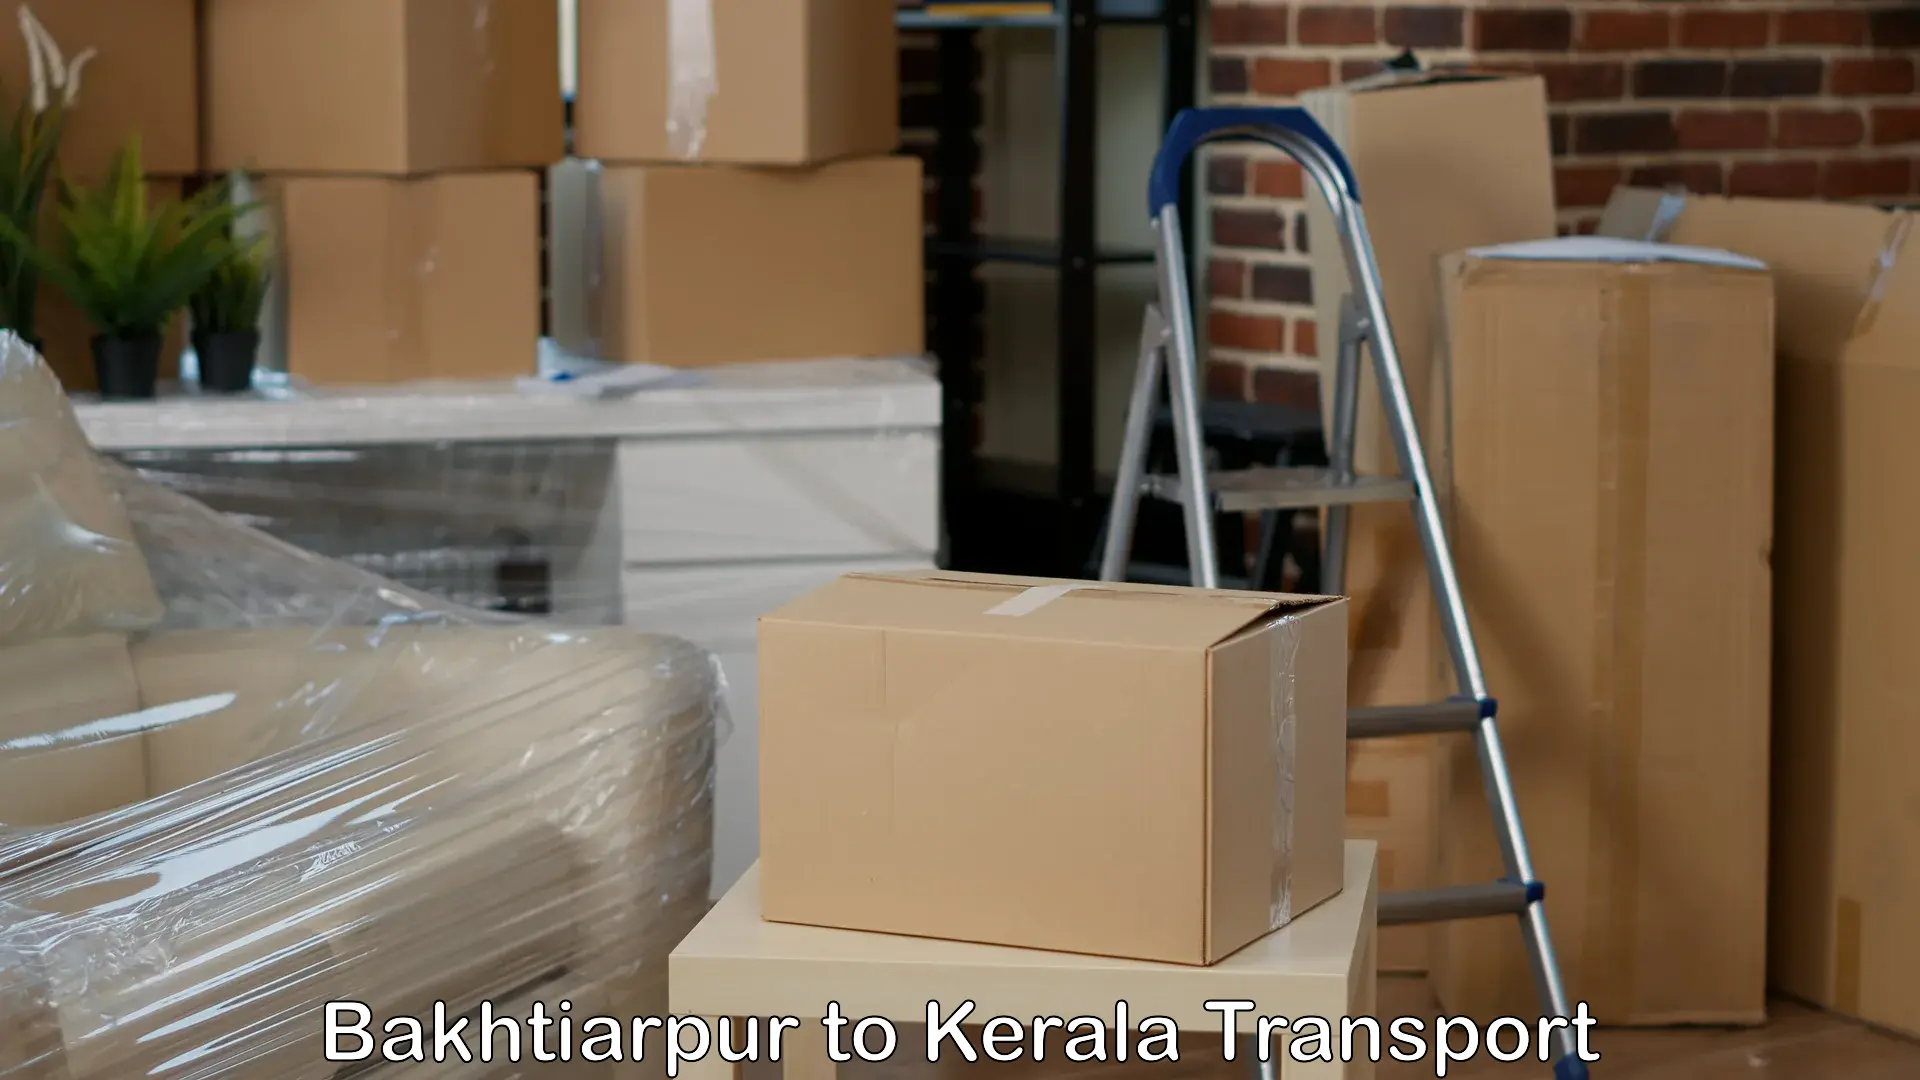 Delivery service Bakhtiarpur to Vaikom